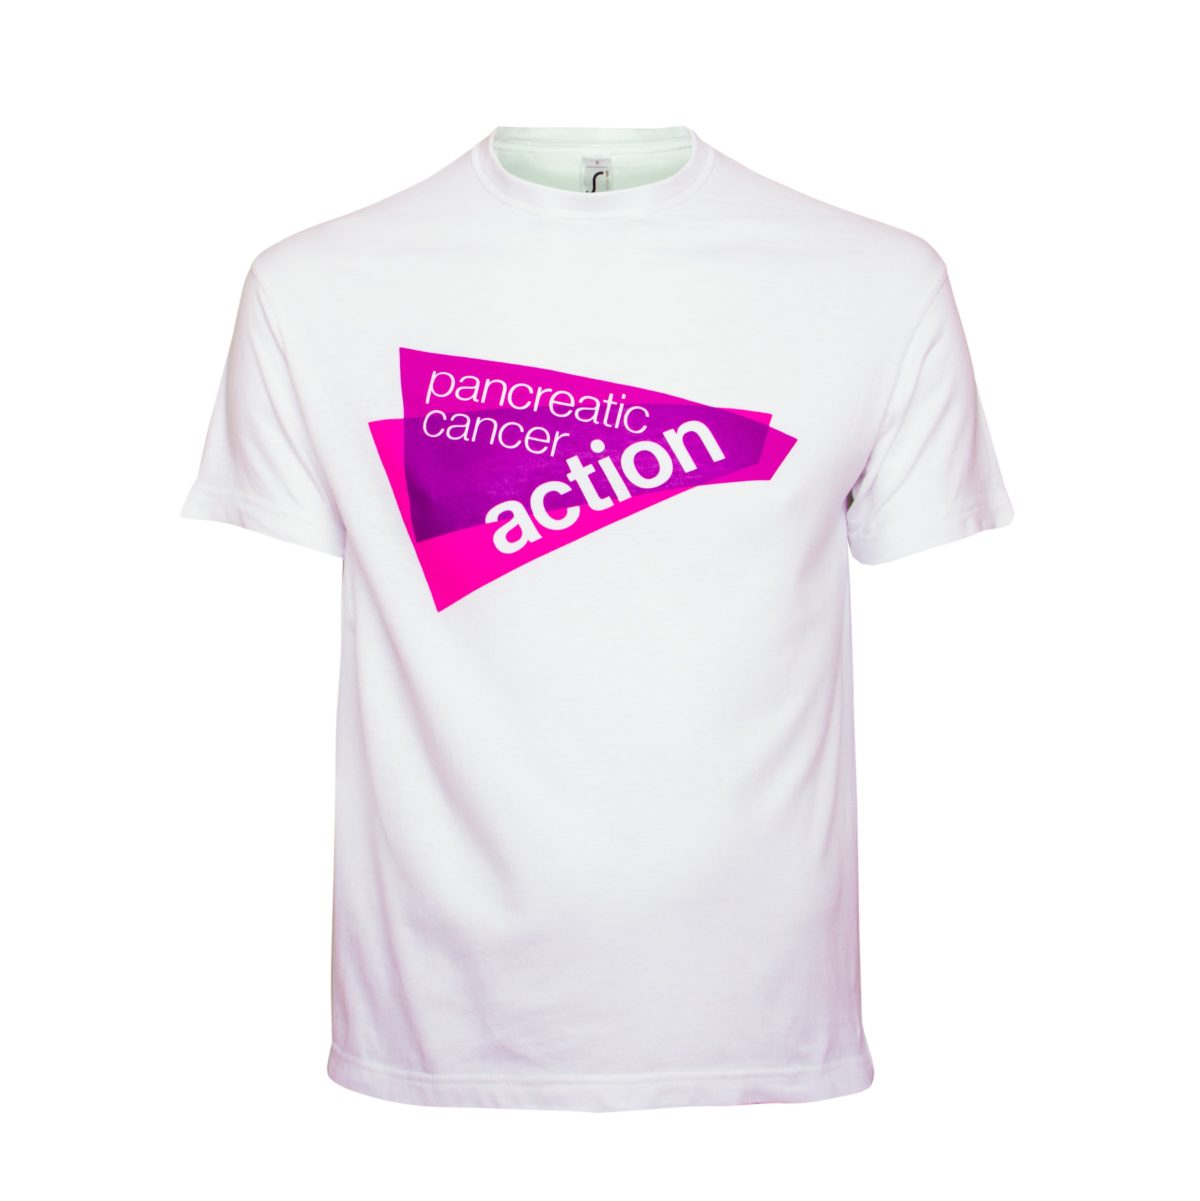 Pancreatic Cancer Action t-shirt